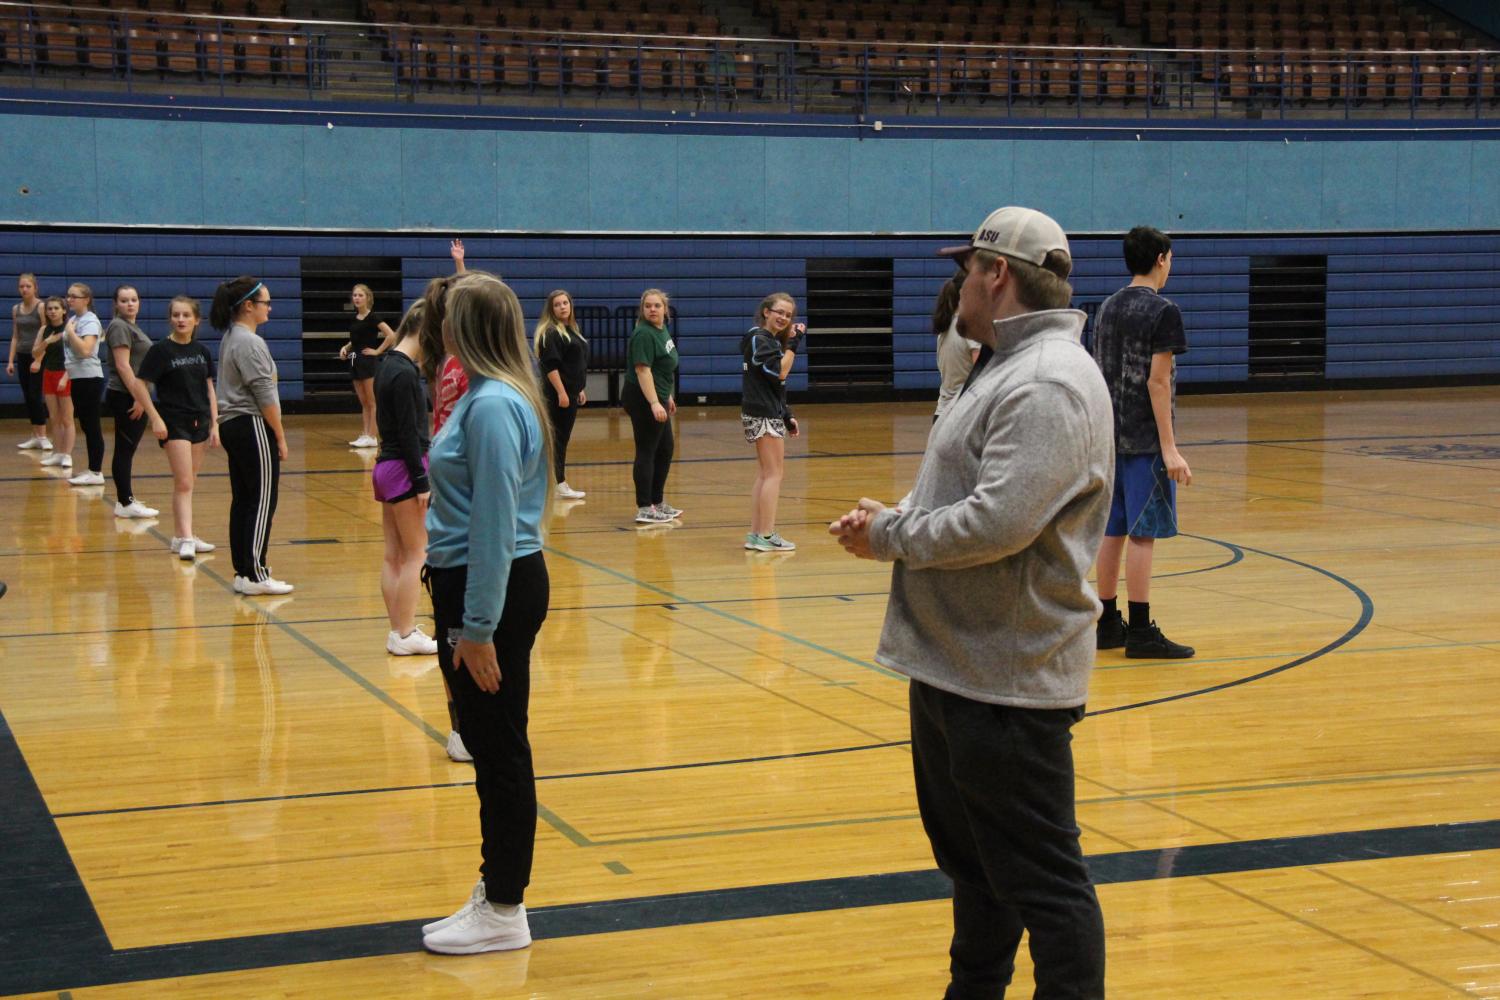 Upcoming cheerleaders practice their skills last Thursday.